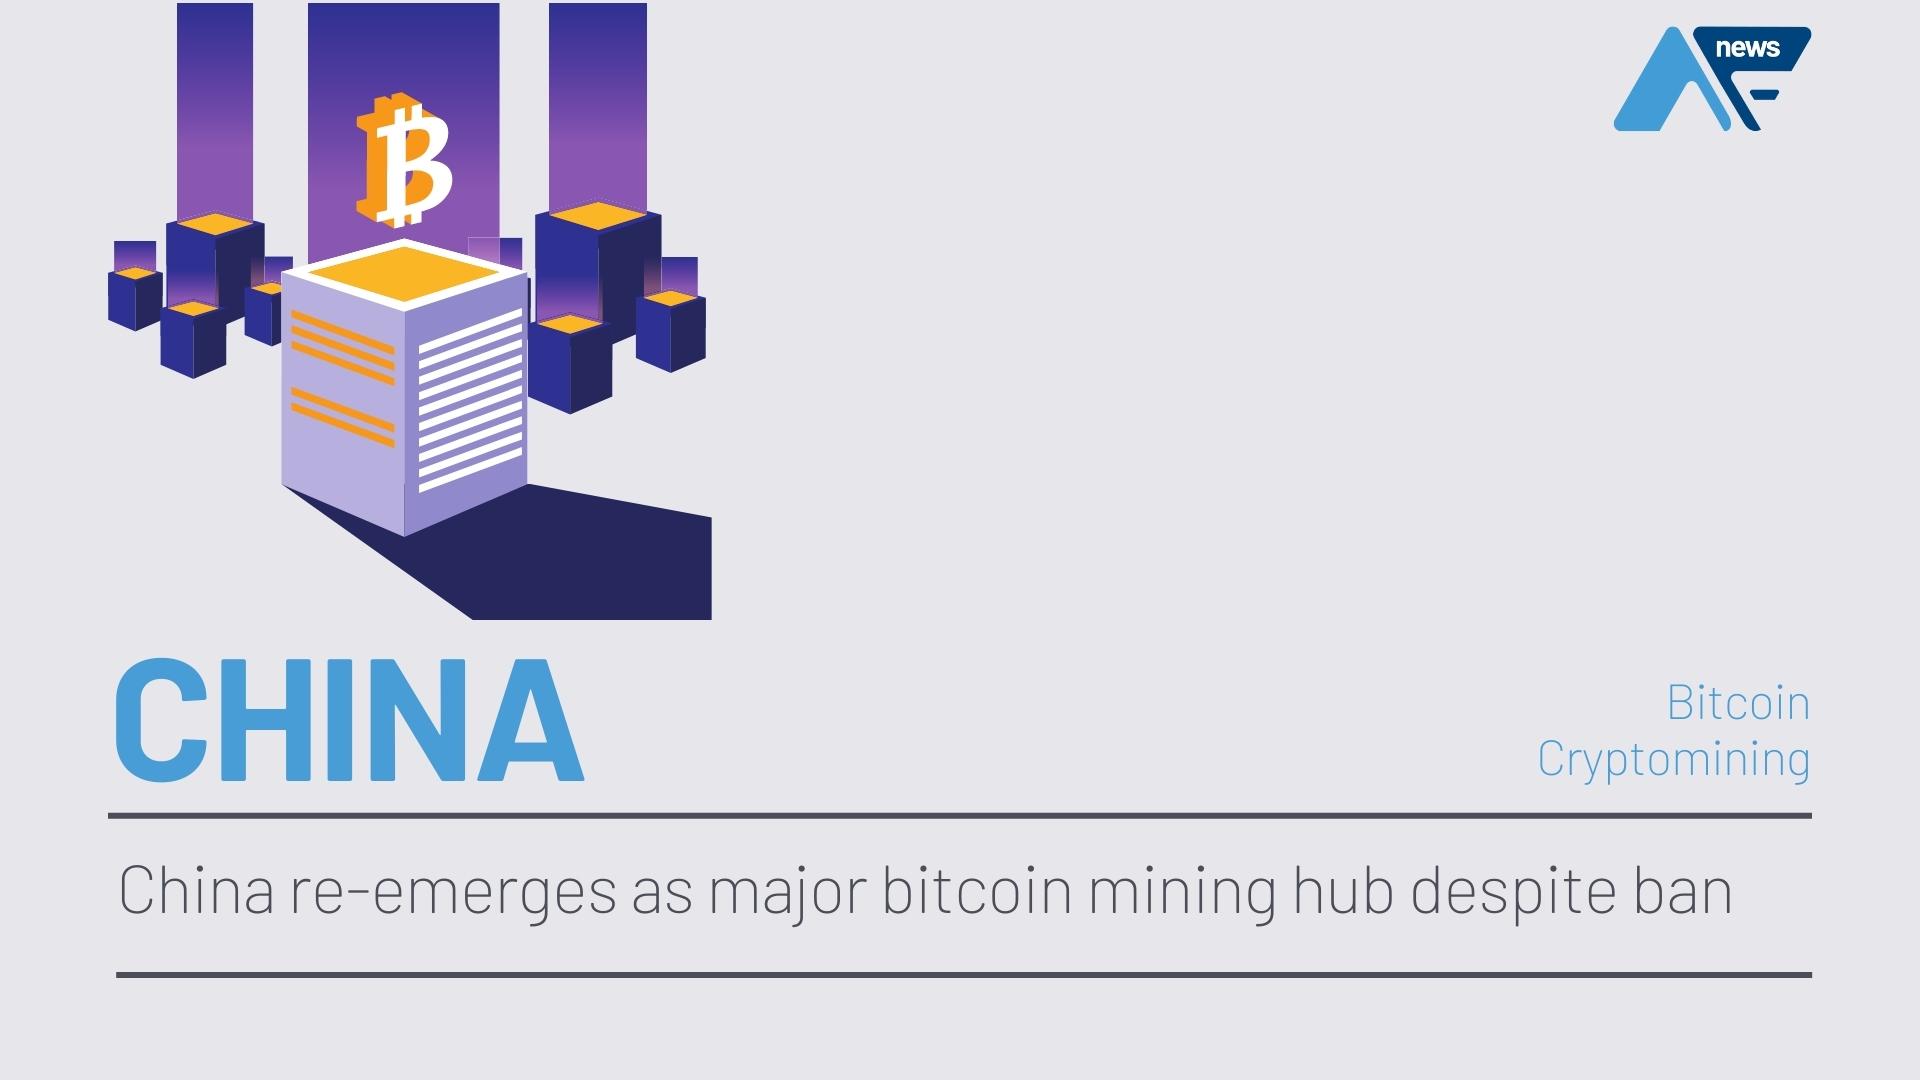 China Becomes World’s Second-Biggest Bitcoin Mining Hub